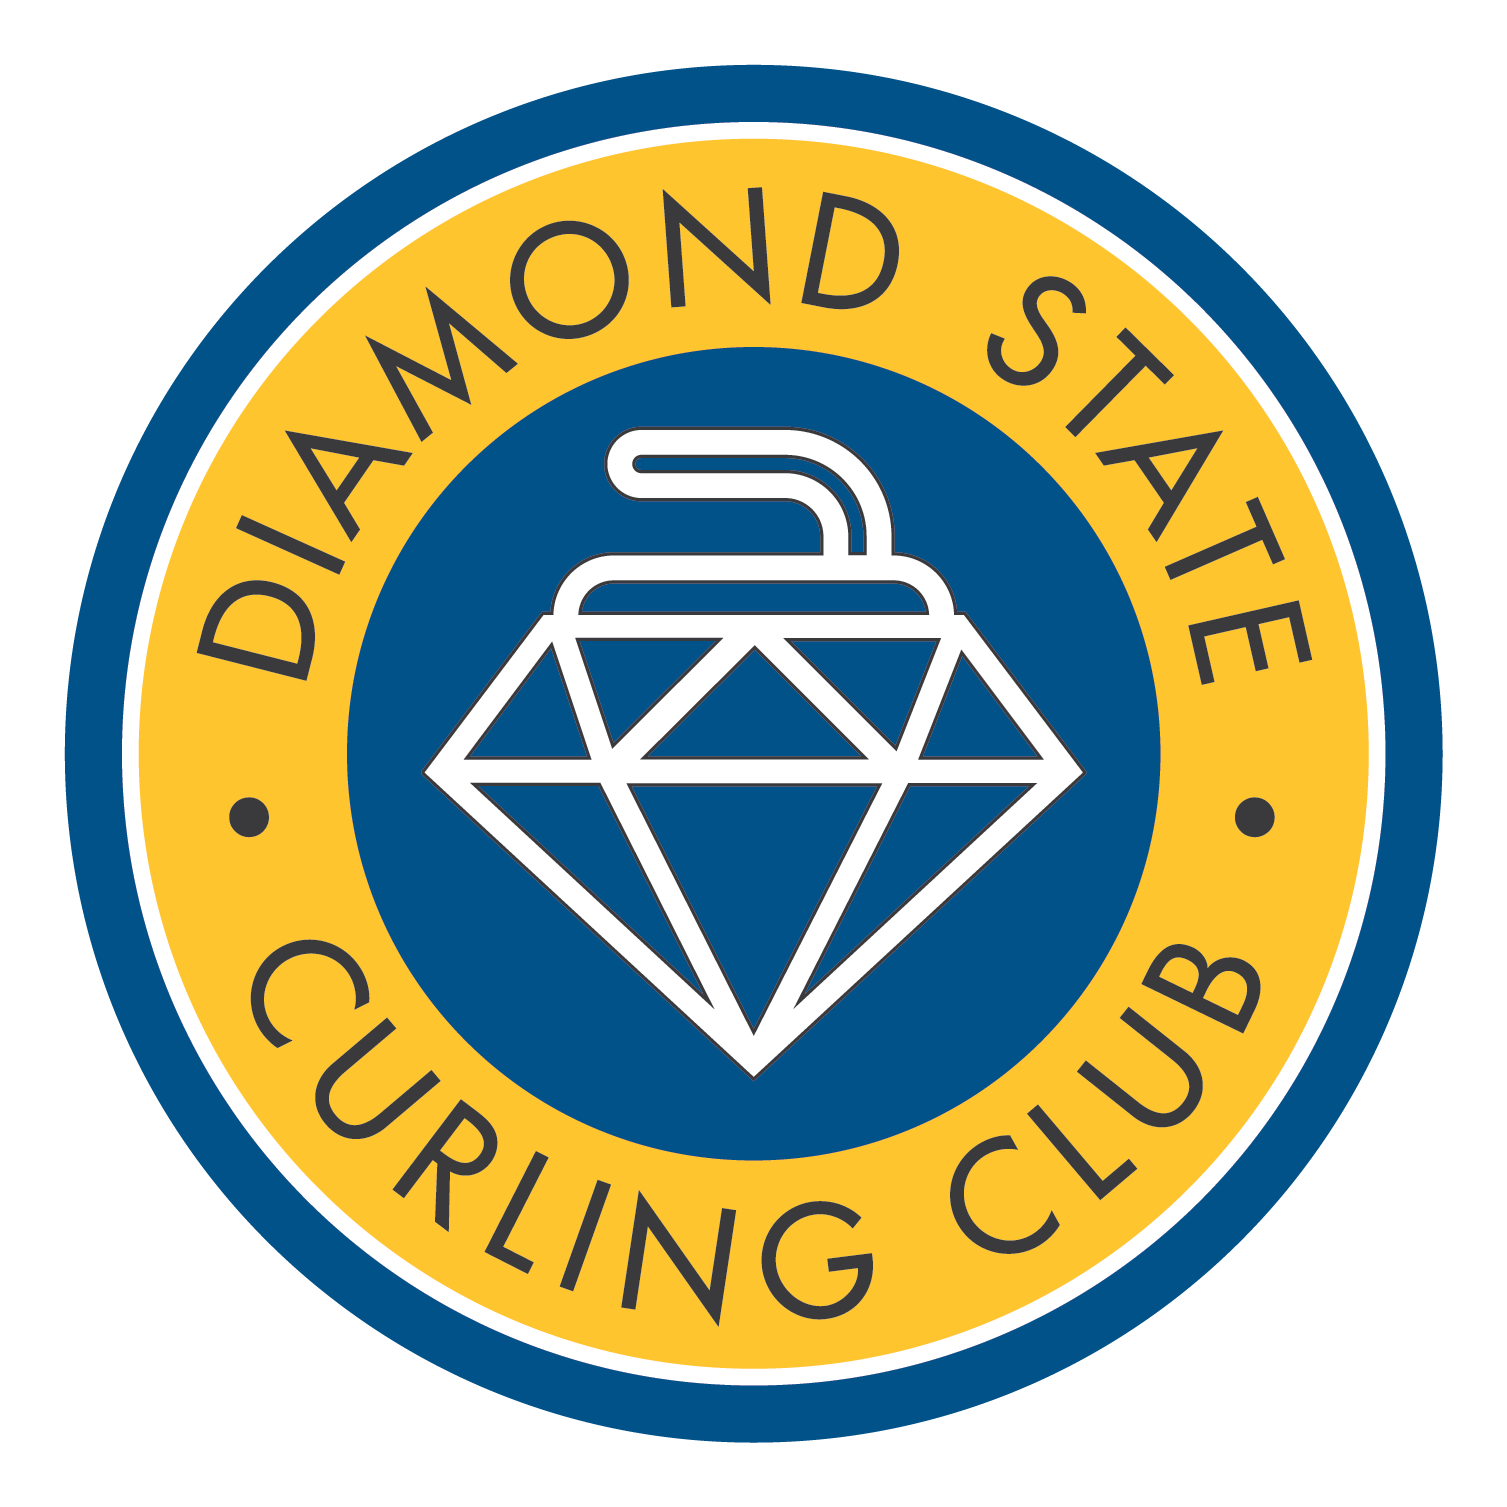 Diamond State Curling Club